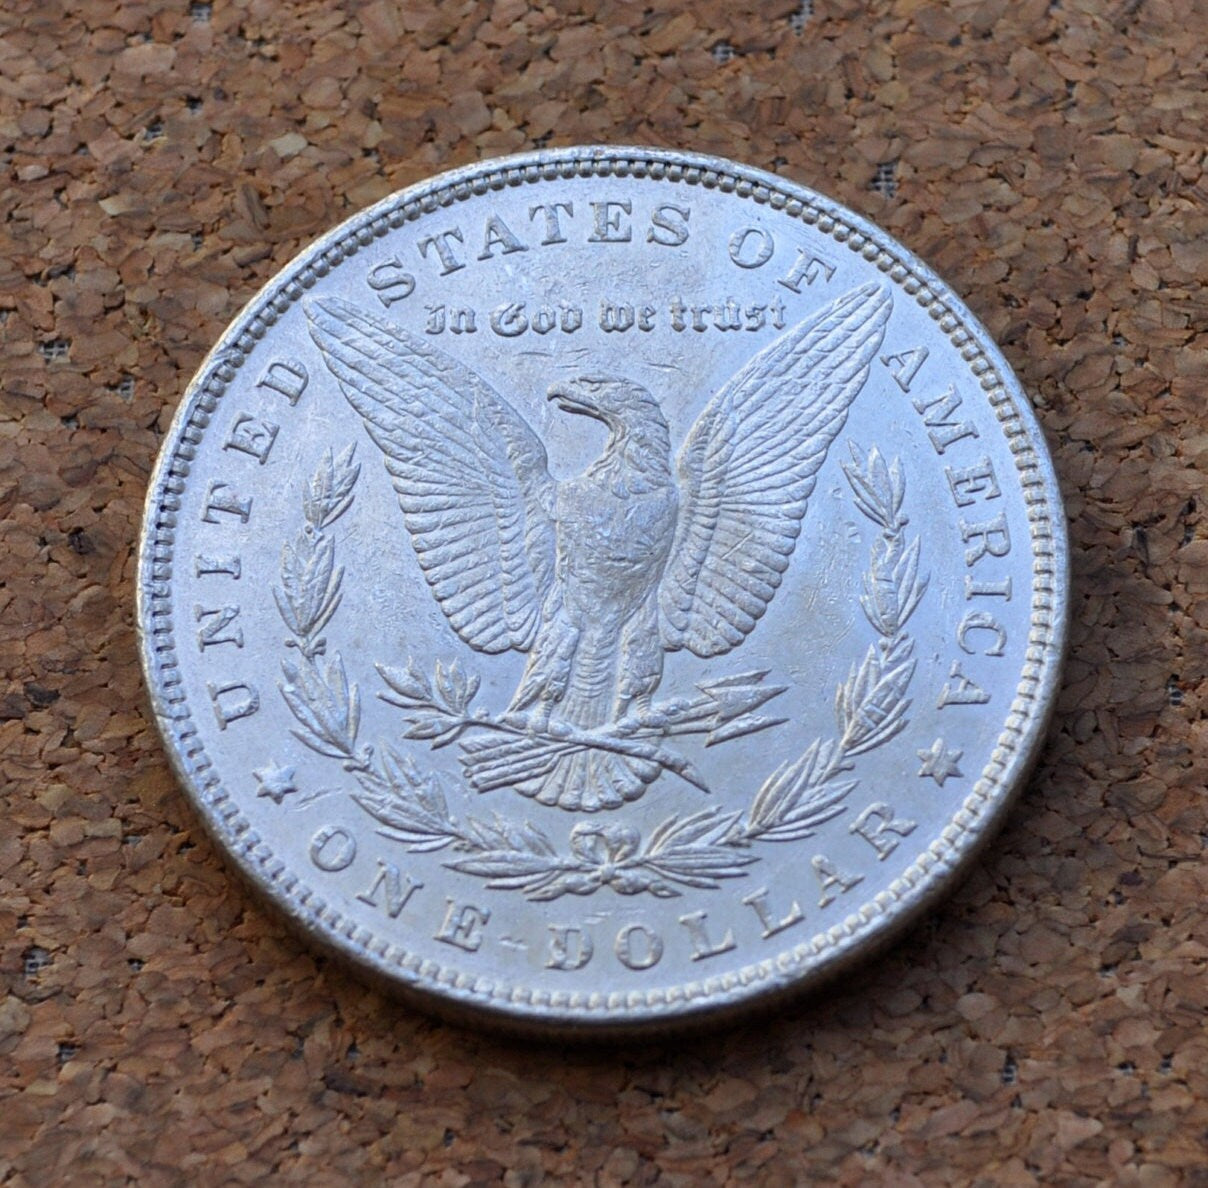 1898 Morgan Silver Dollar - AU (About Uncirculated) / Incredible Detail & Great Date - 1898 P Morgan Silver - 1898P Silver Dollar AU50